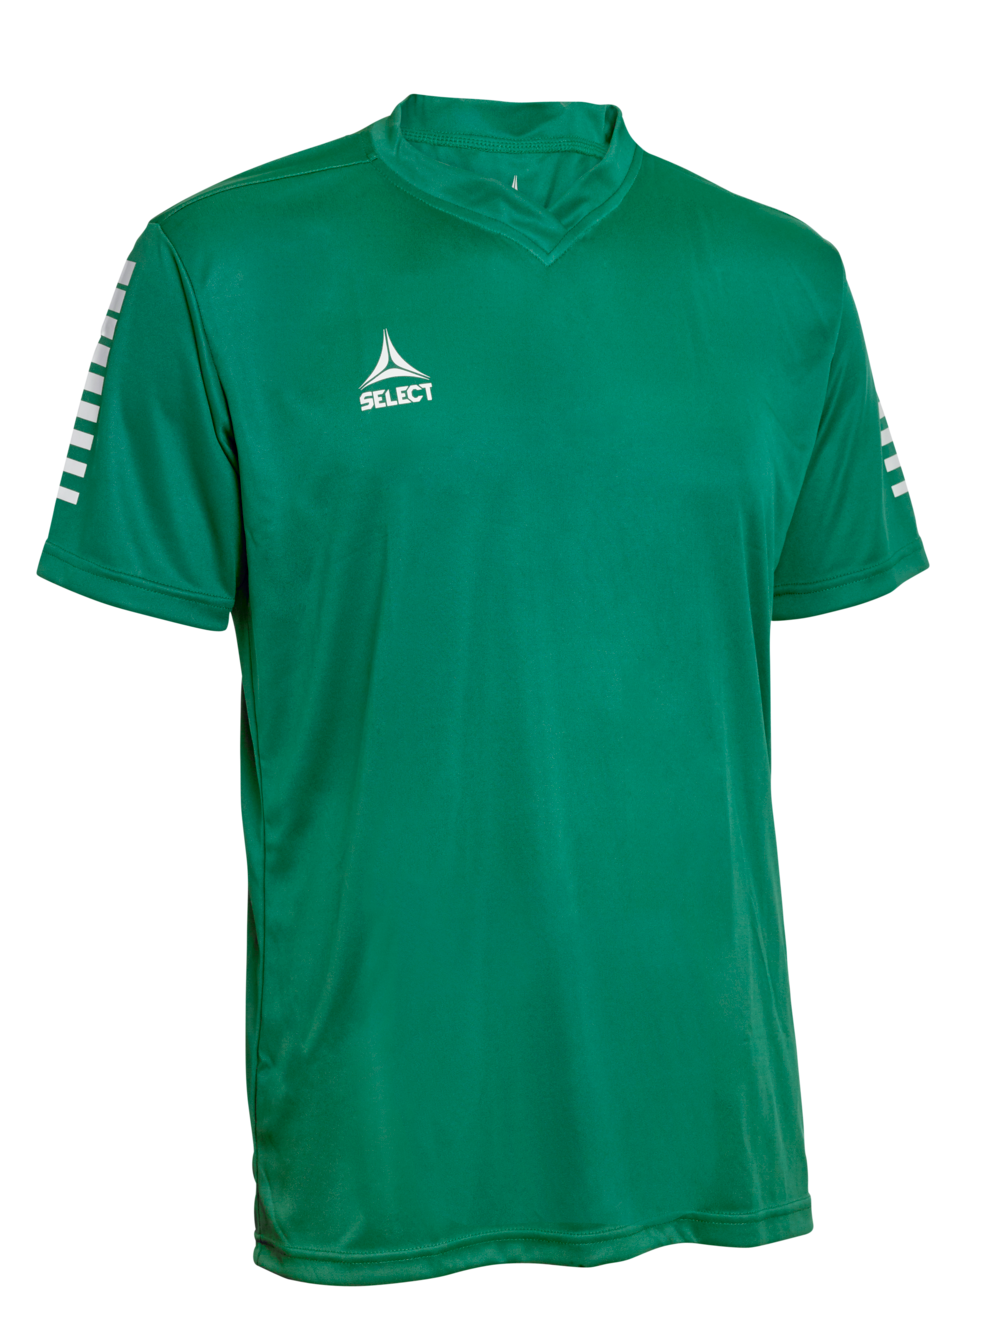 pisa_player_shirt_s-s_green